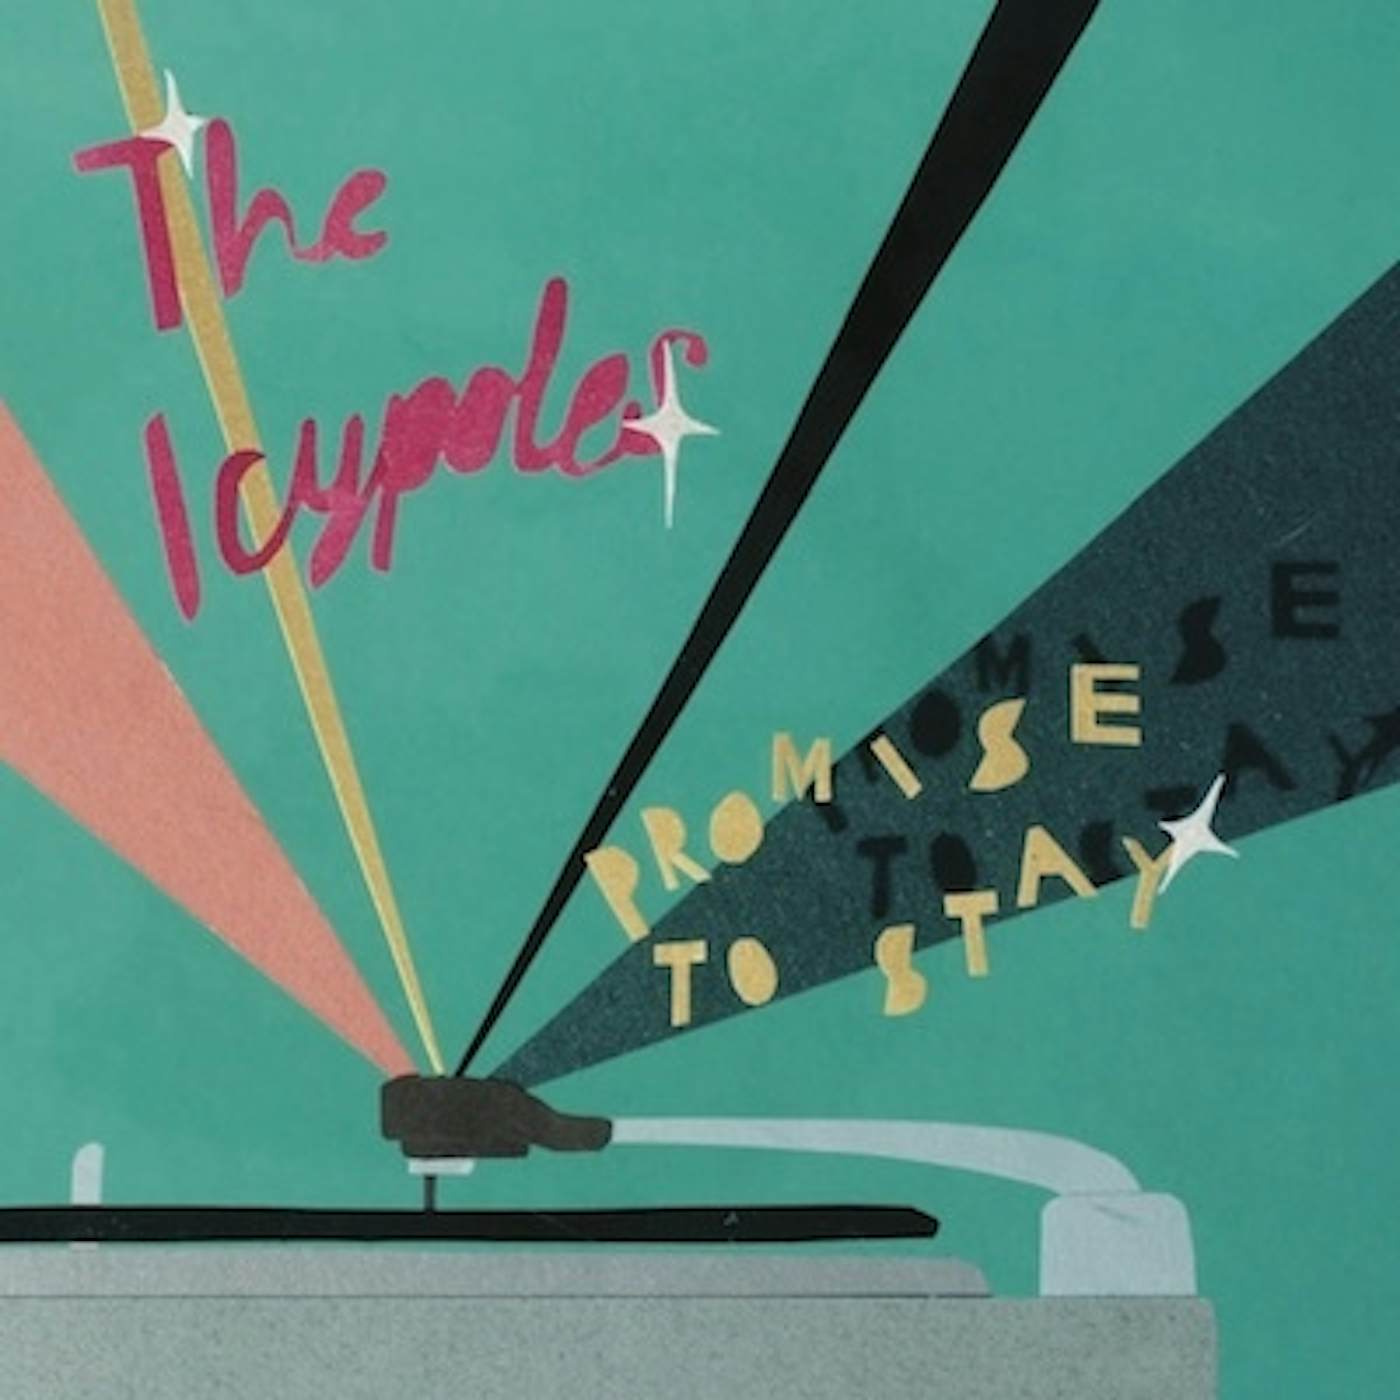 The Icypoles Promise To Stay Vinyl Record